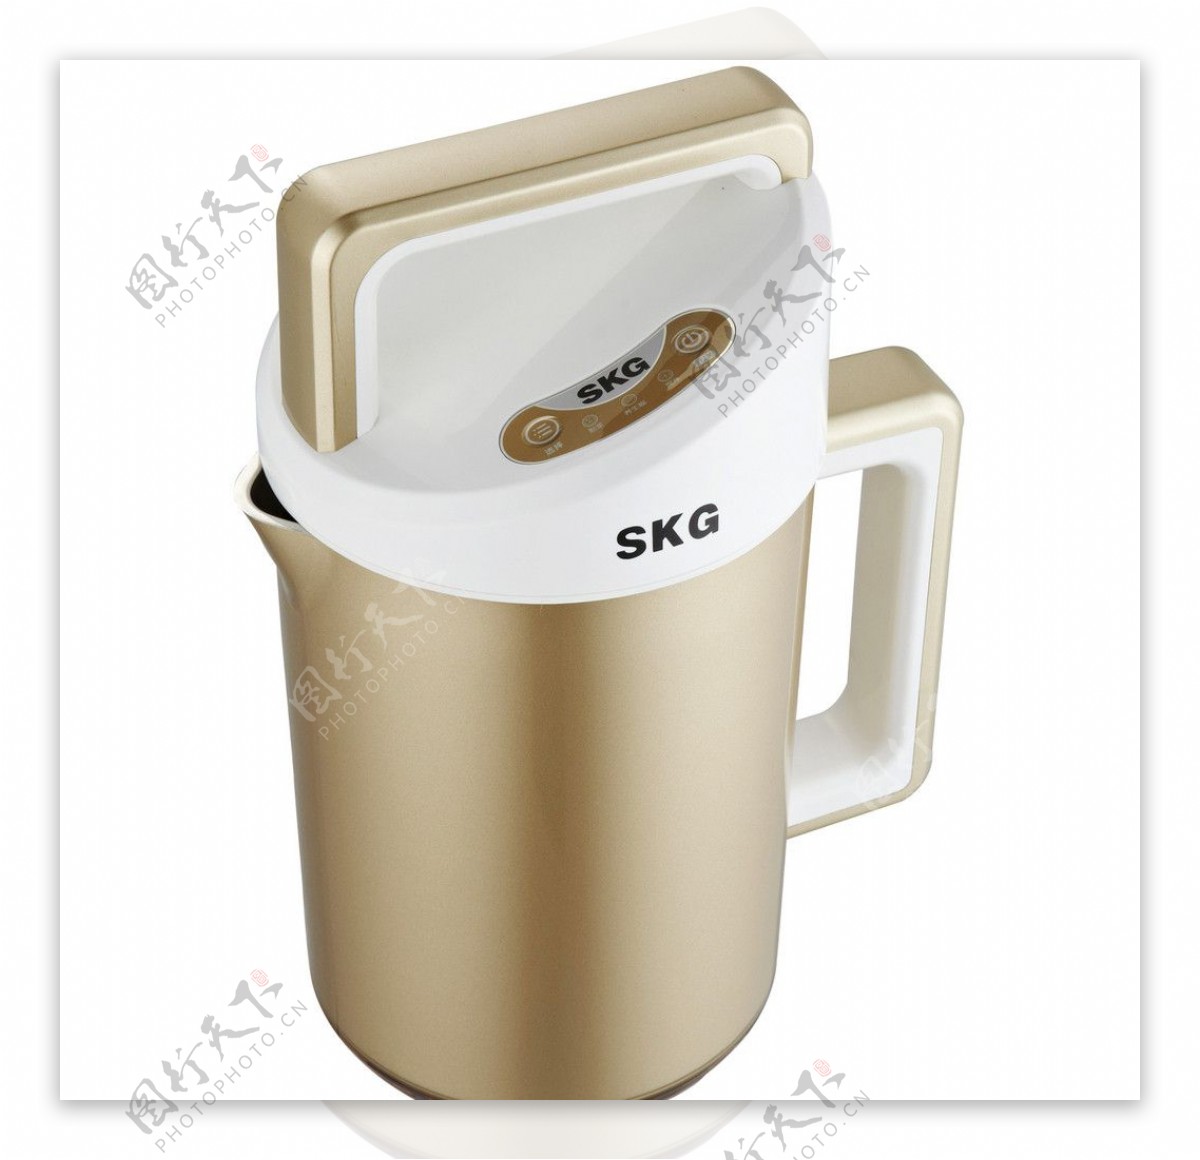 SKG电热保温豆浆杯图片